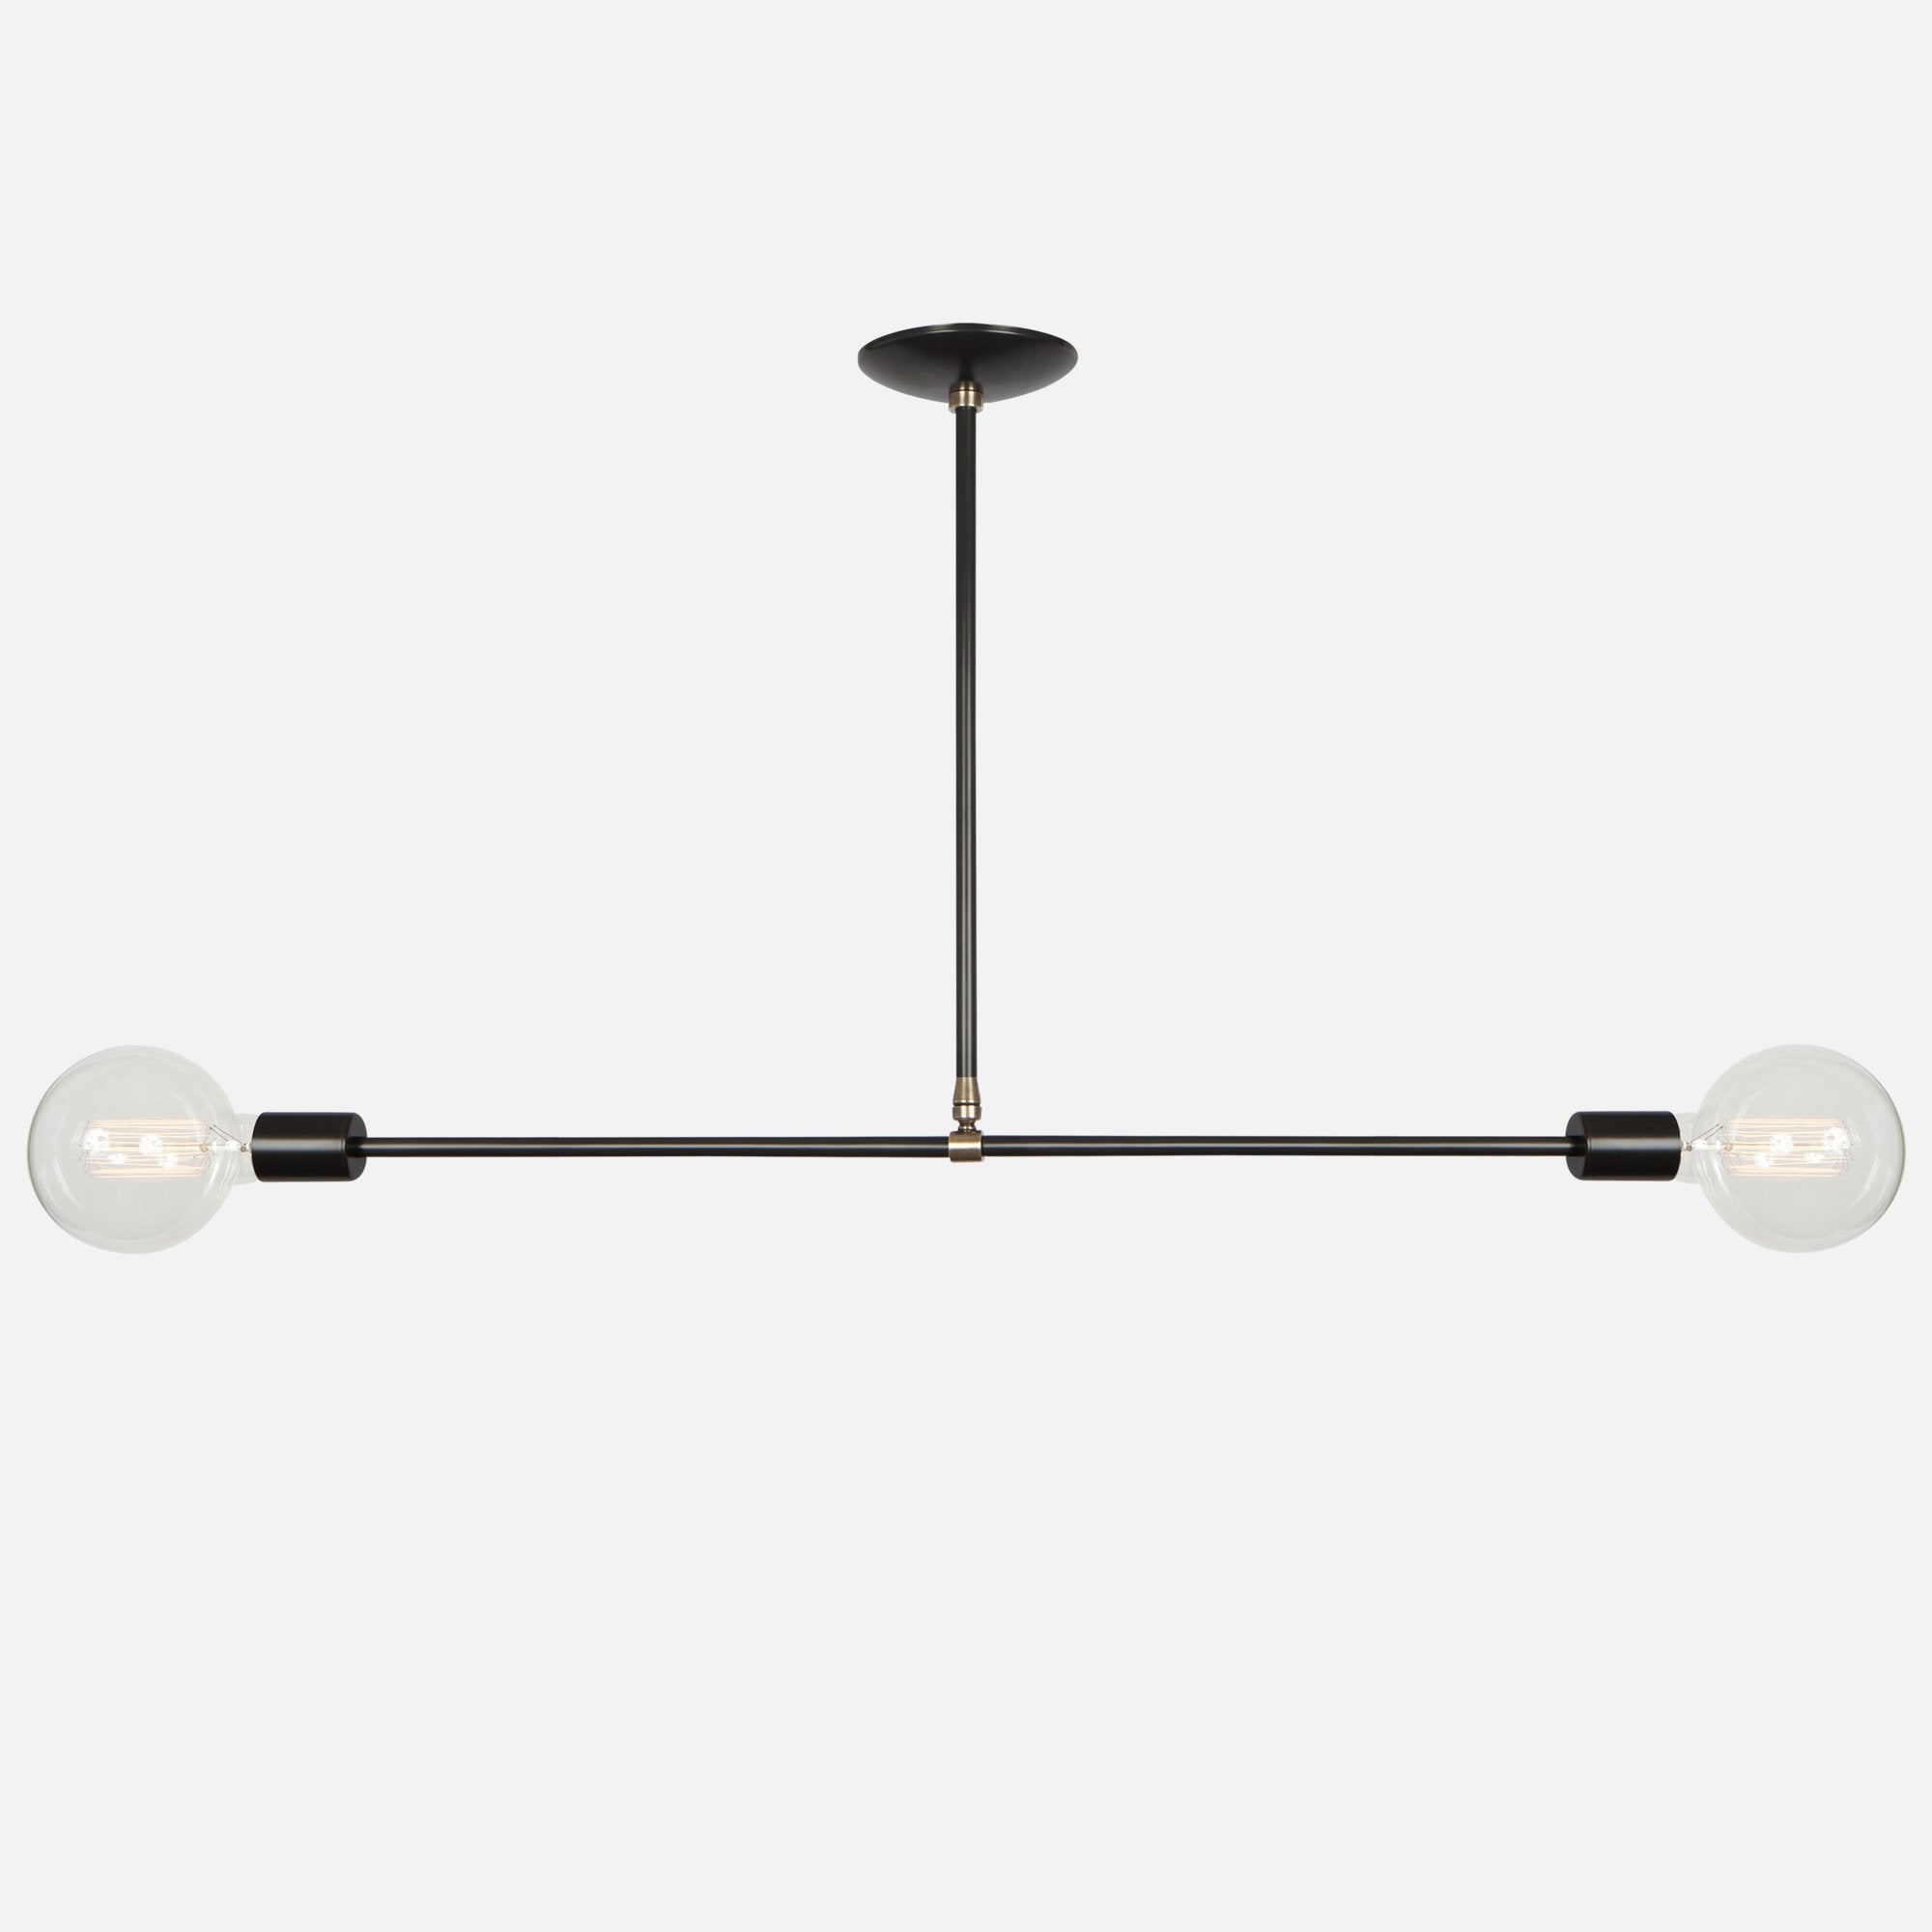 Balance Pendant Light - Horizontal - Matte Black with Aged Brass Details